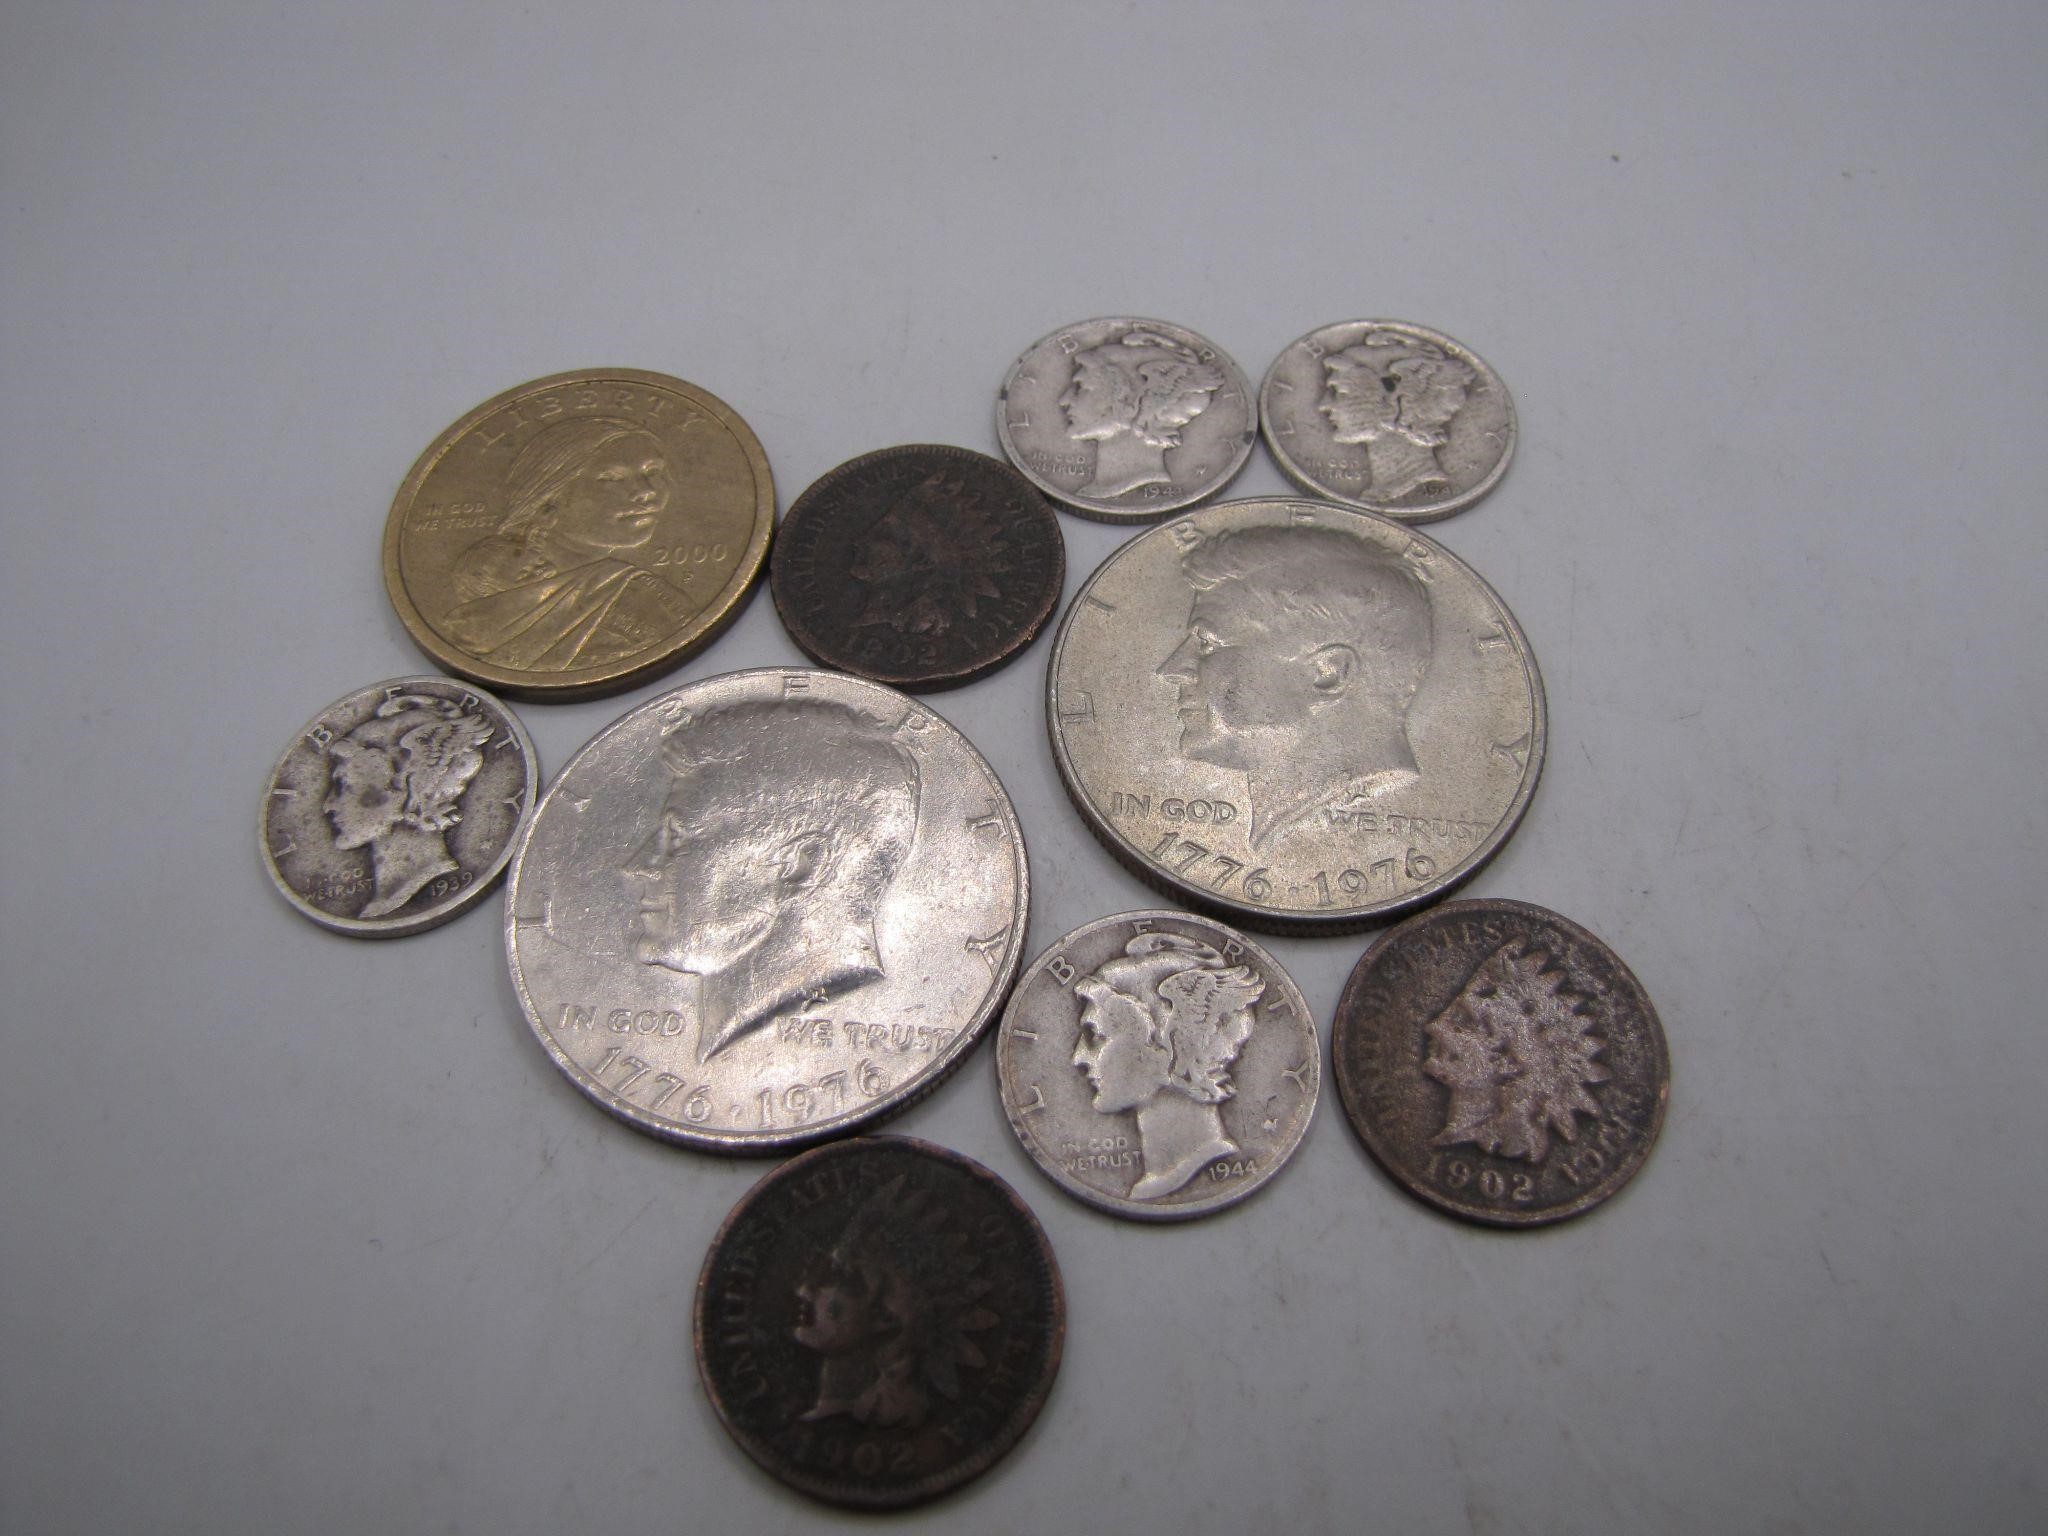 Grab Bag Lot of Vintage U.S. Coins - Some Silver!!